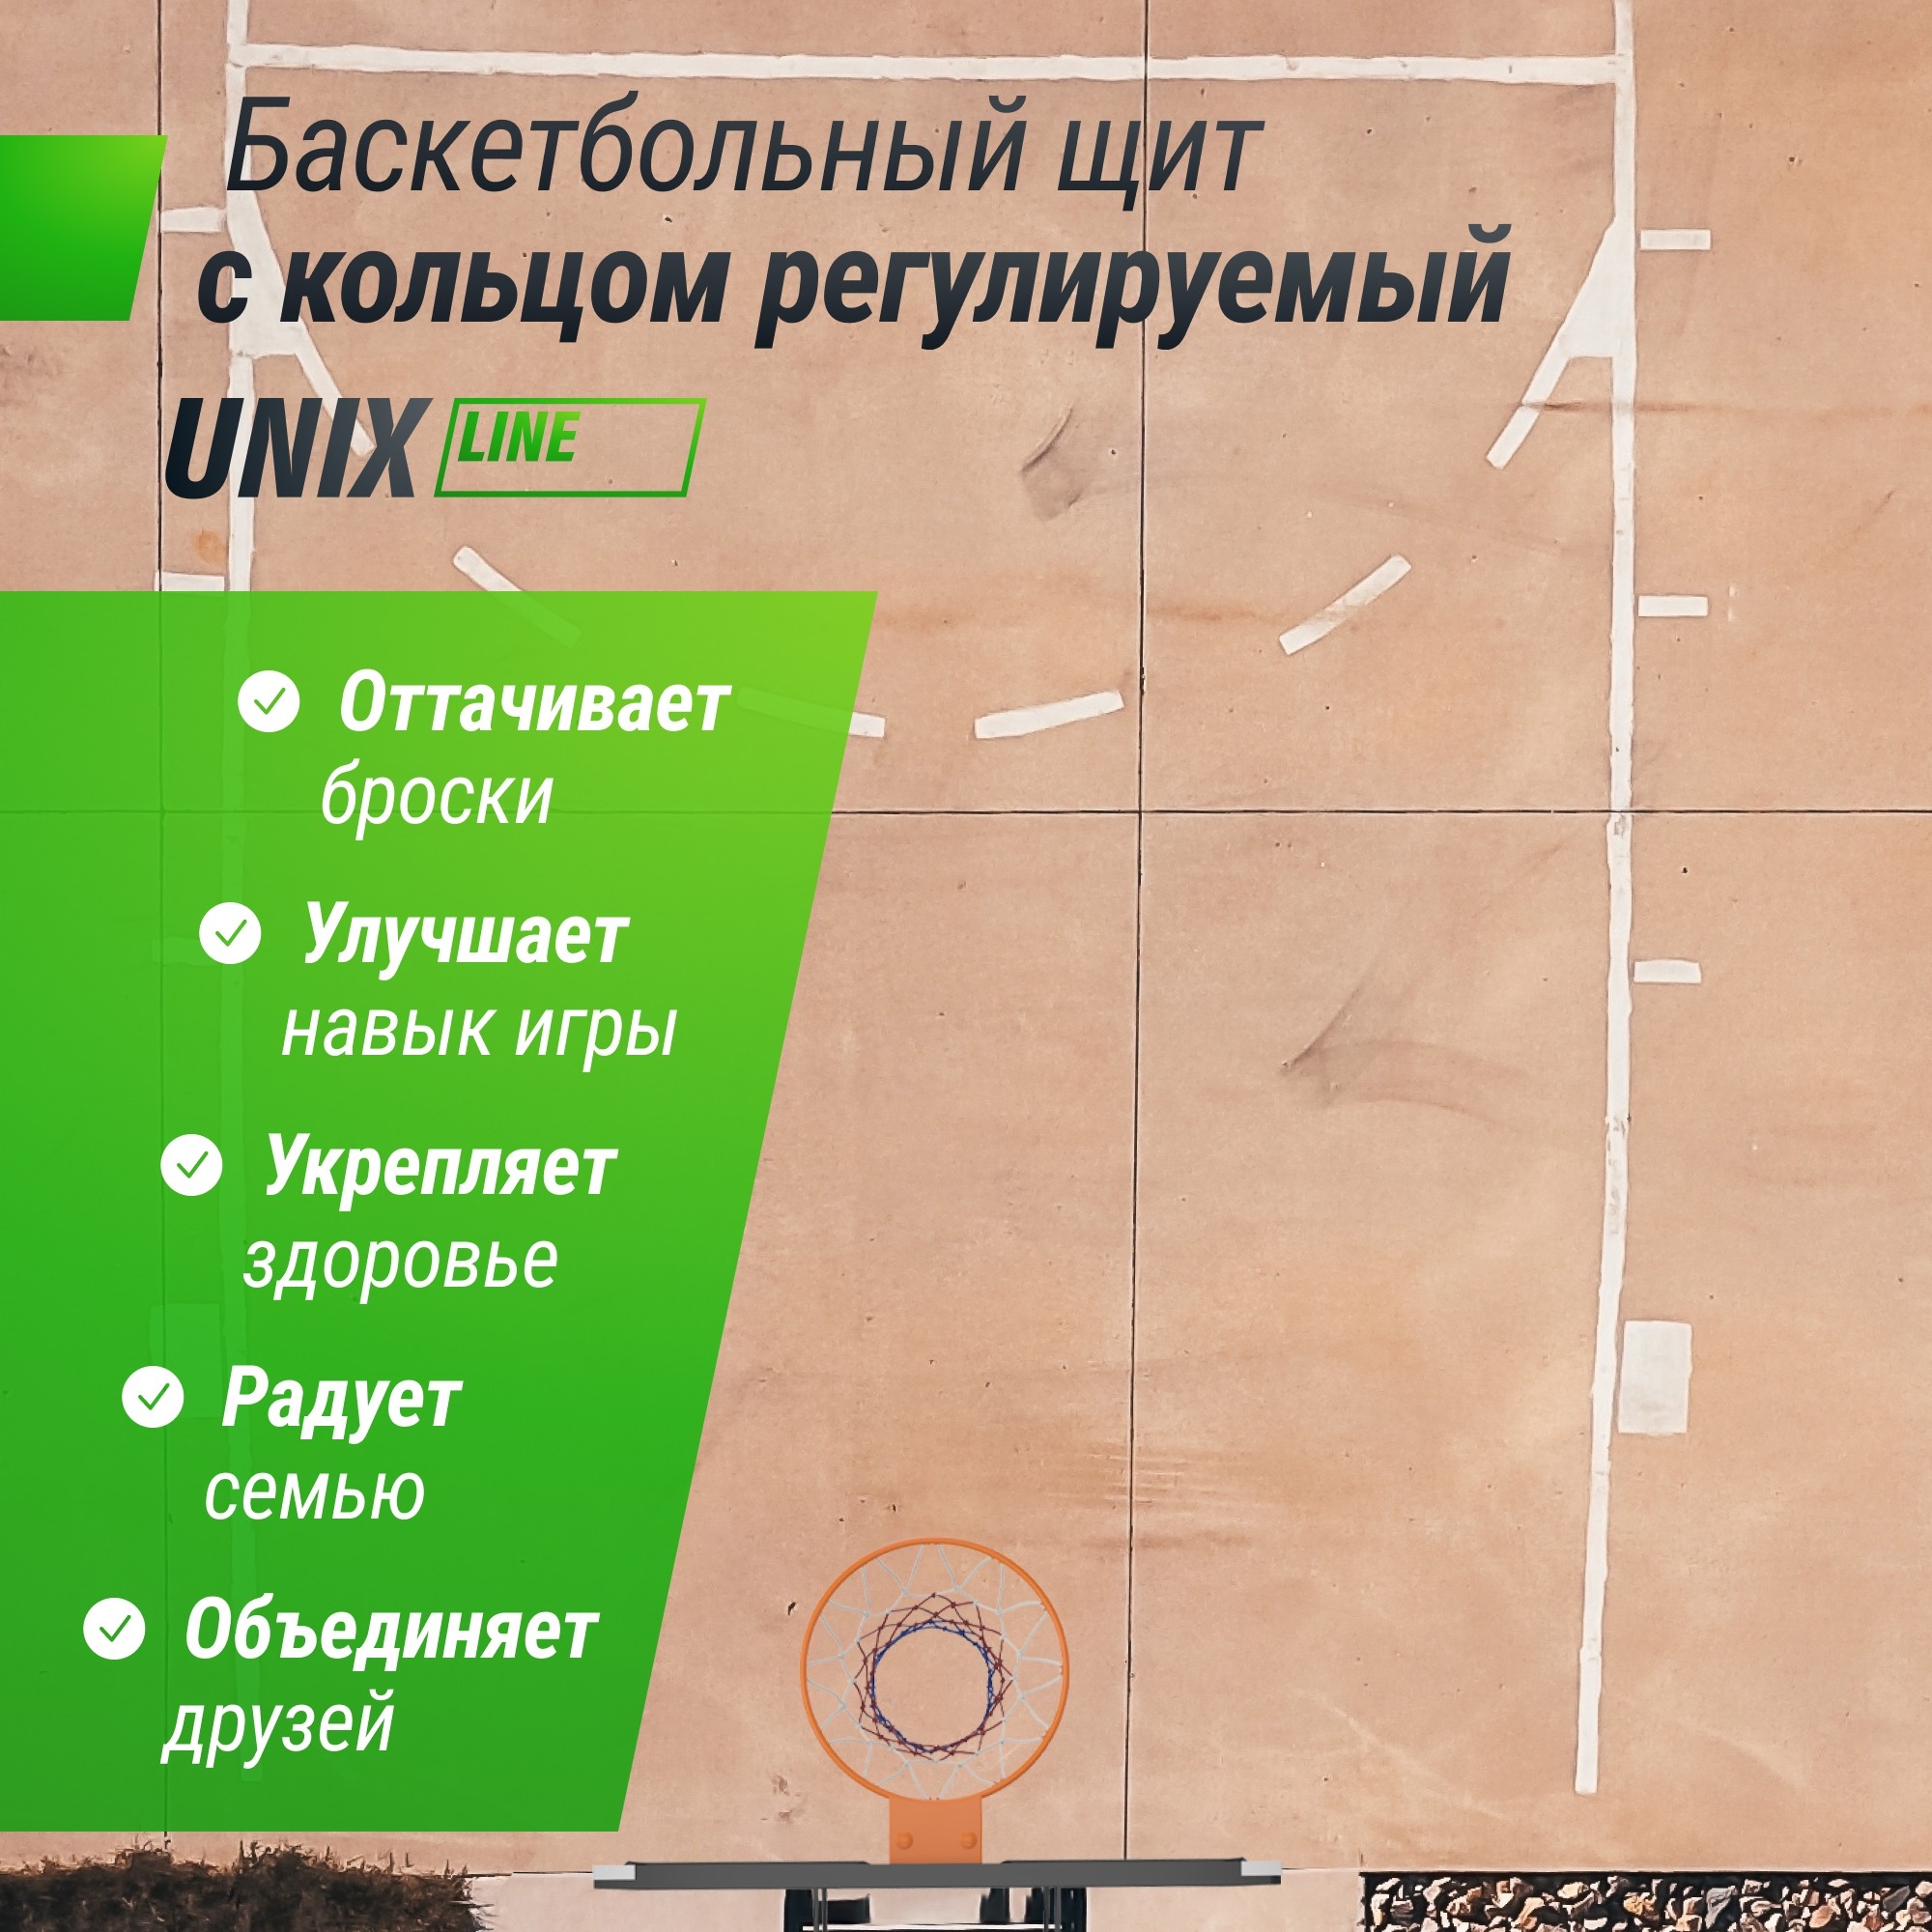 Баскетбольный щит 50"x32" R45 Unix Line B-Backboard-PC BSBS50PCBK 2000_2000